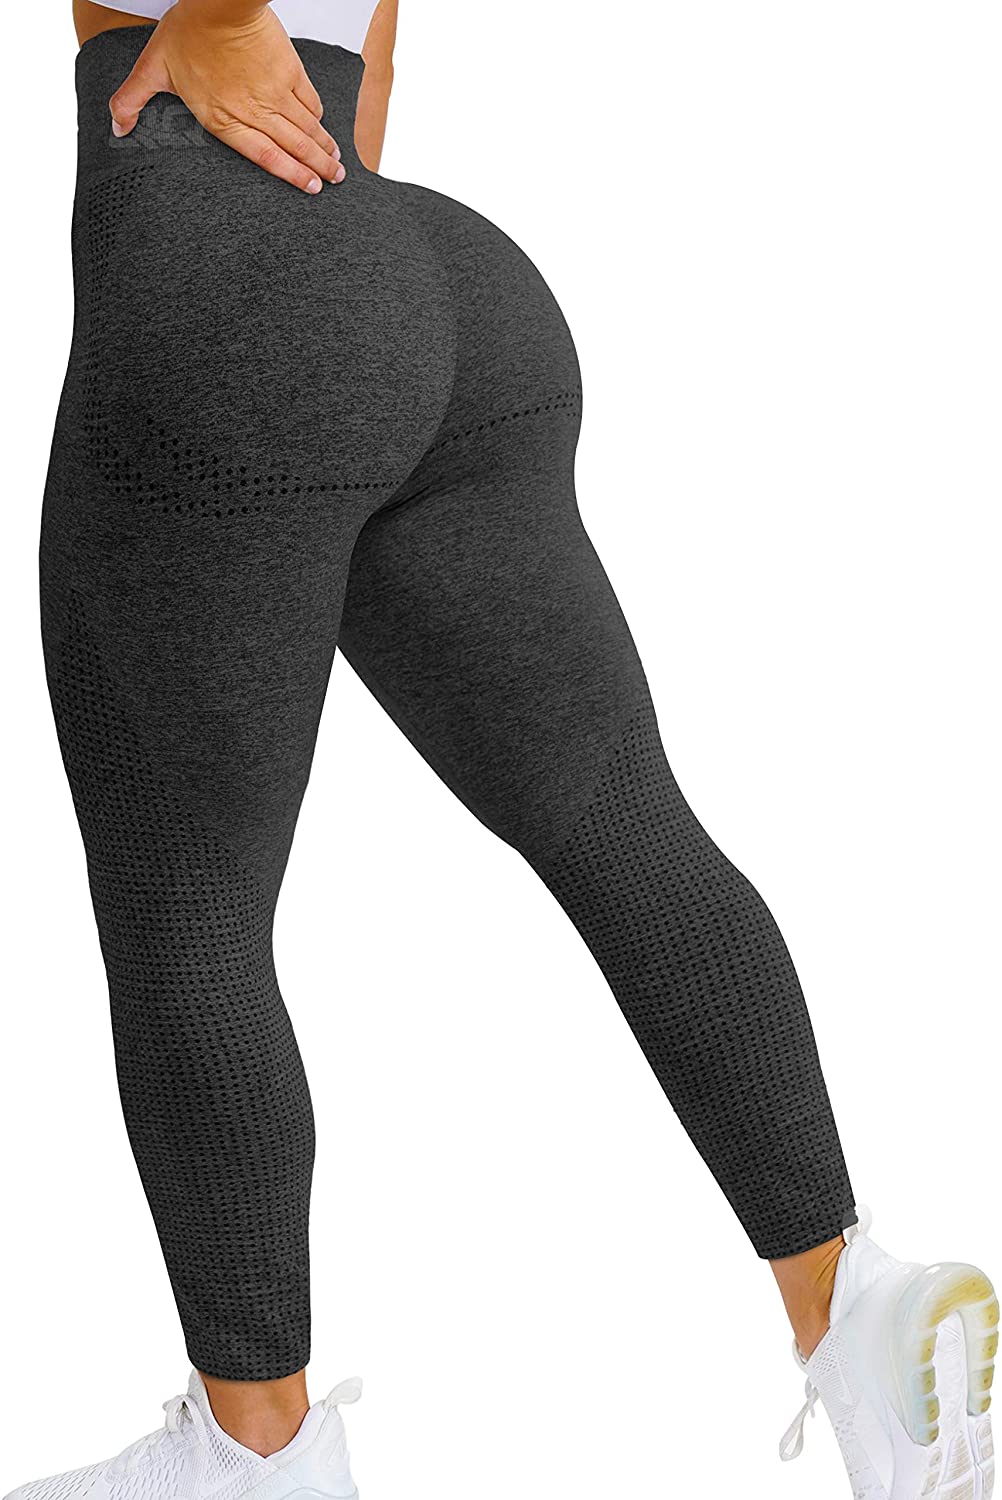 QOQ Women's Seamless Leggings High Waist Gym Running Vital Yoga Pants Butt Lift Workout Tights Tummy Control 